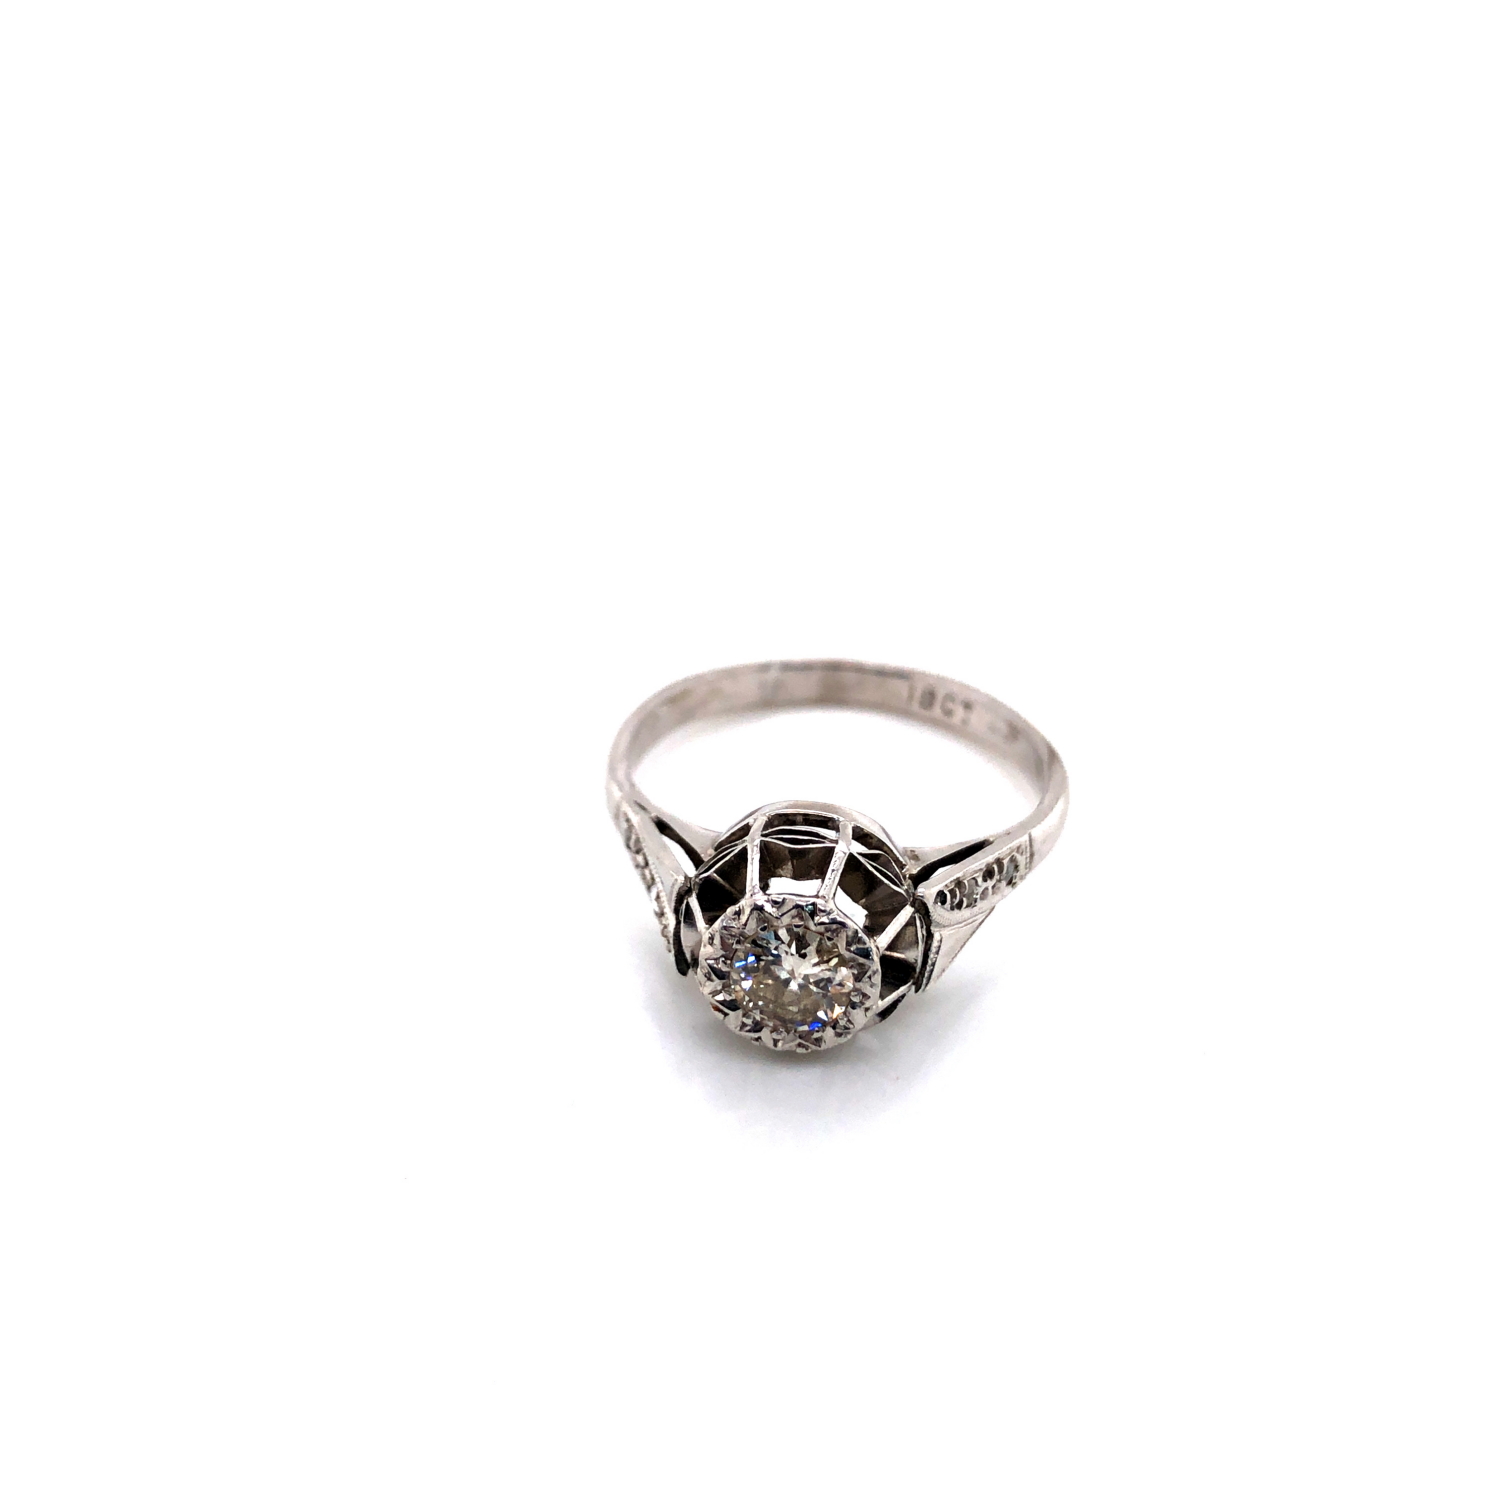 A VINTAGE DIAMOND SOLITAIRE RING COMPLETE WITH ROSE CUT DIAMOND SET SHOULDERS. THE PRINCIPLE DIAMOND